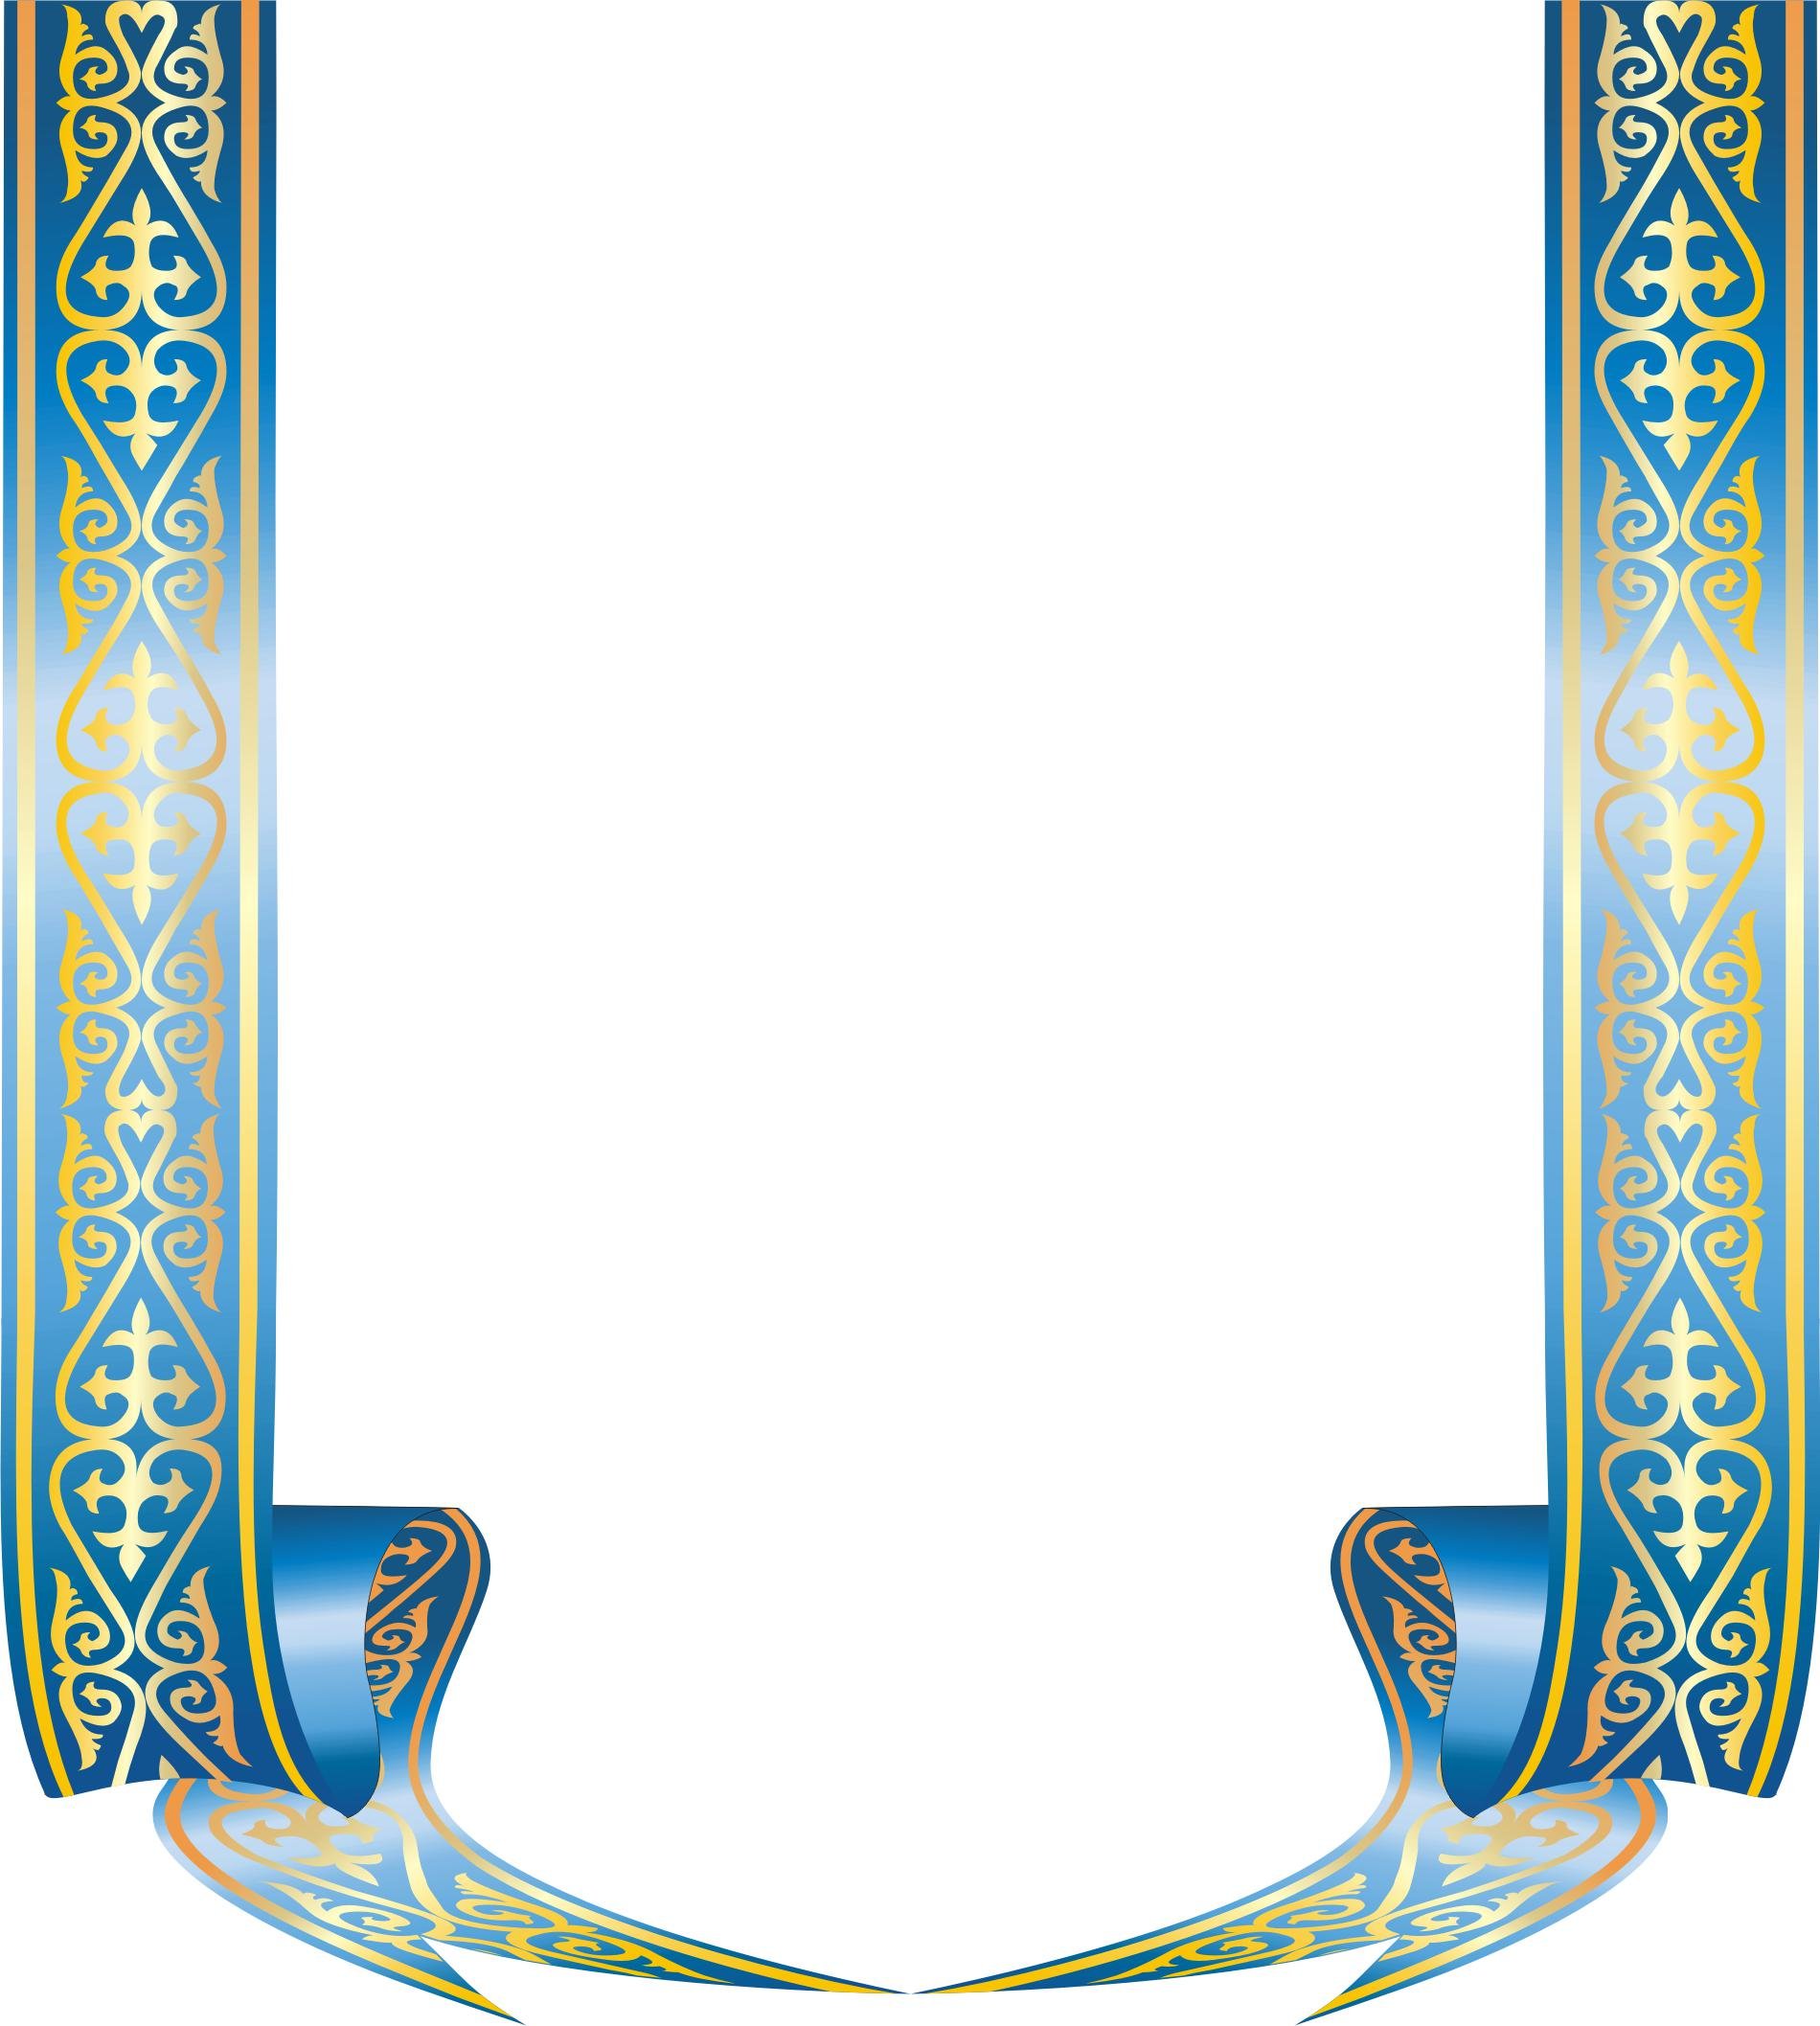 Рамка для грамоты с казахским орнаментом